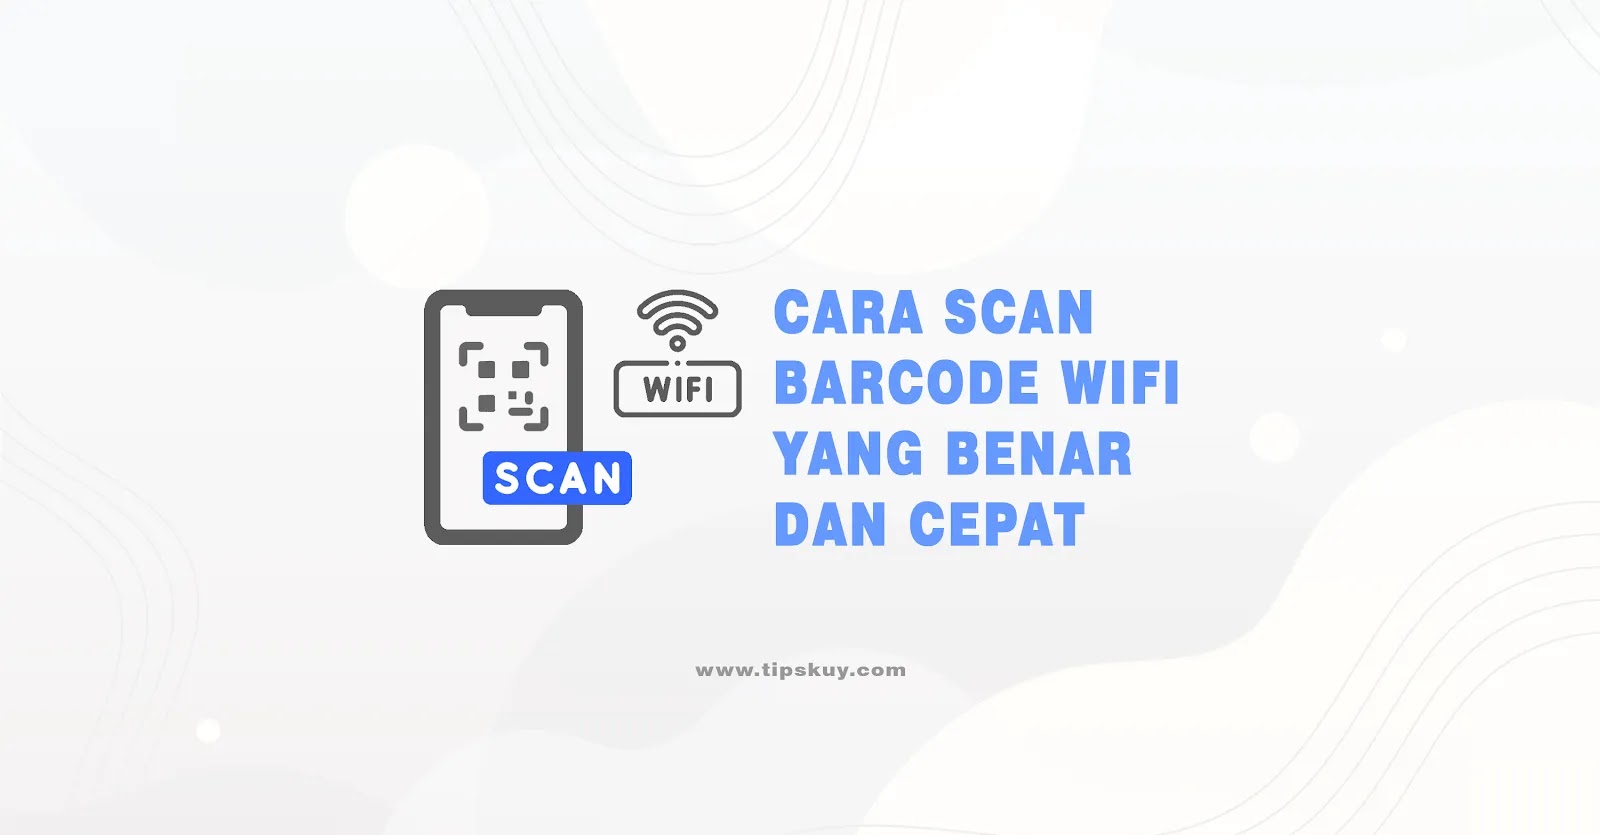 Cara Scan Barcode WiFi